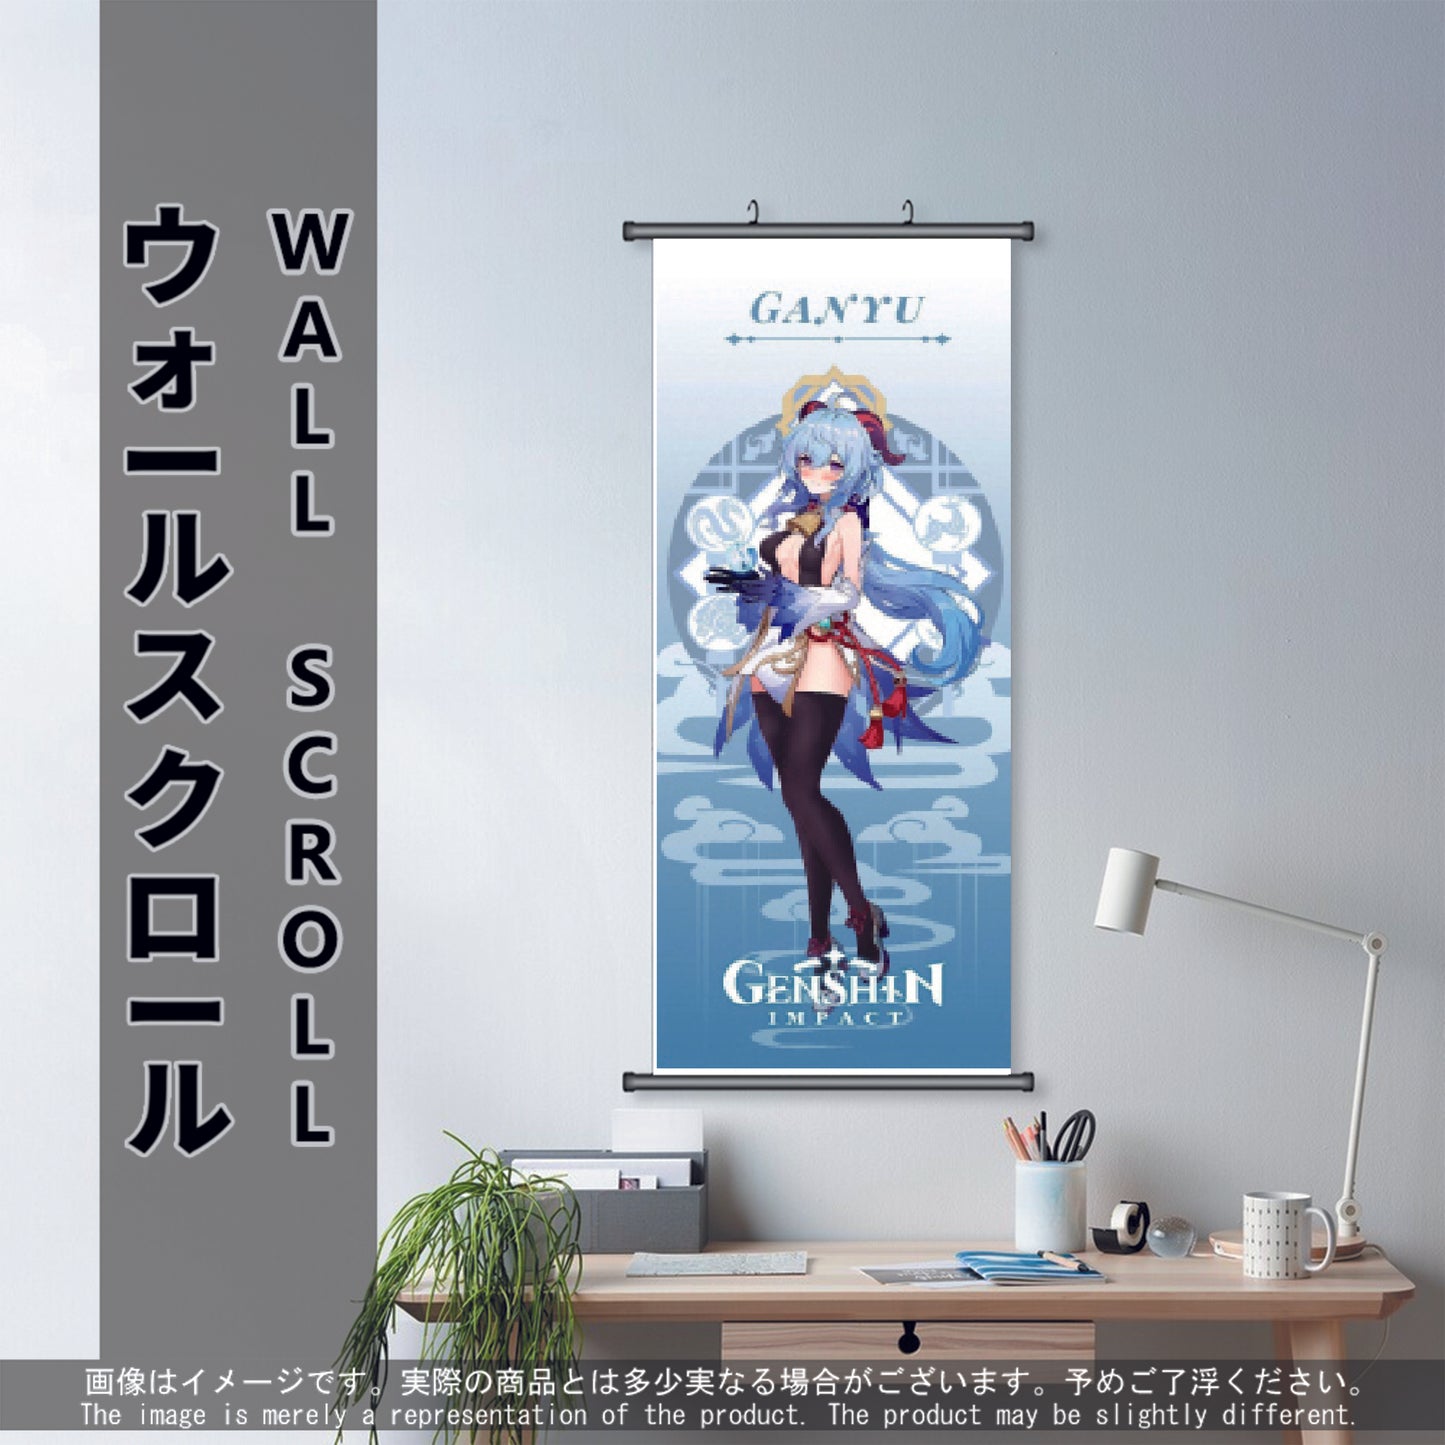 (GSN-CRYO-04) GANYU Genshin Impact Anime Wall Scroll